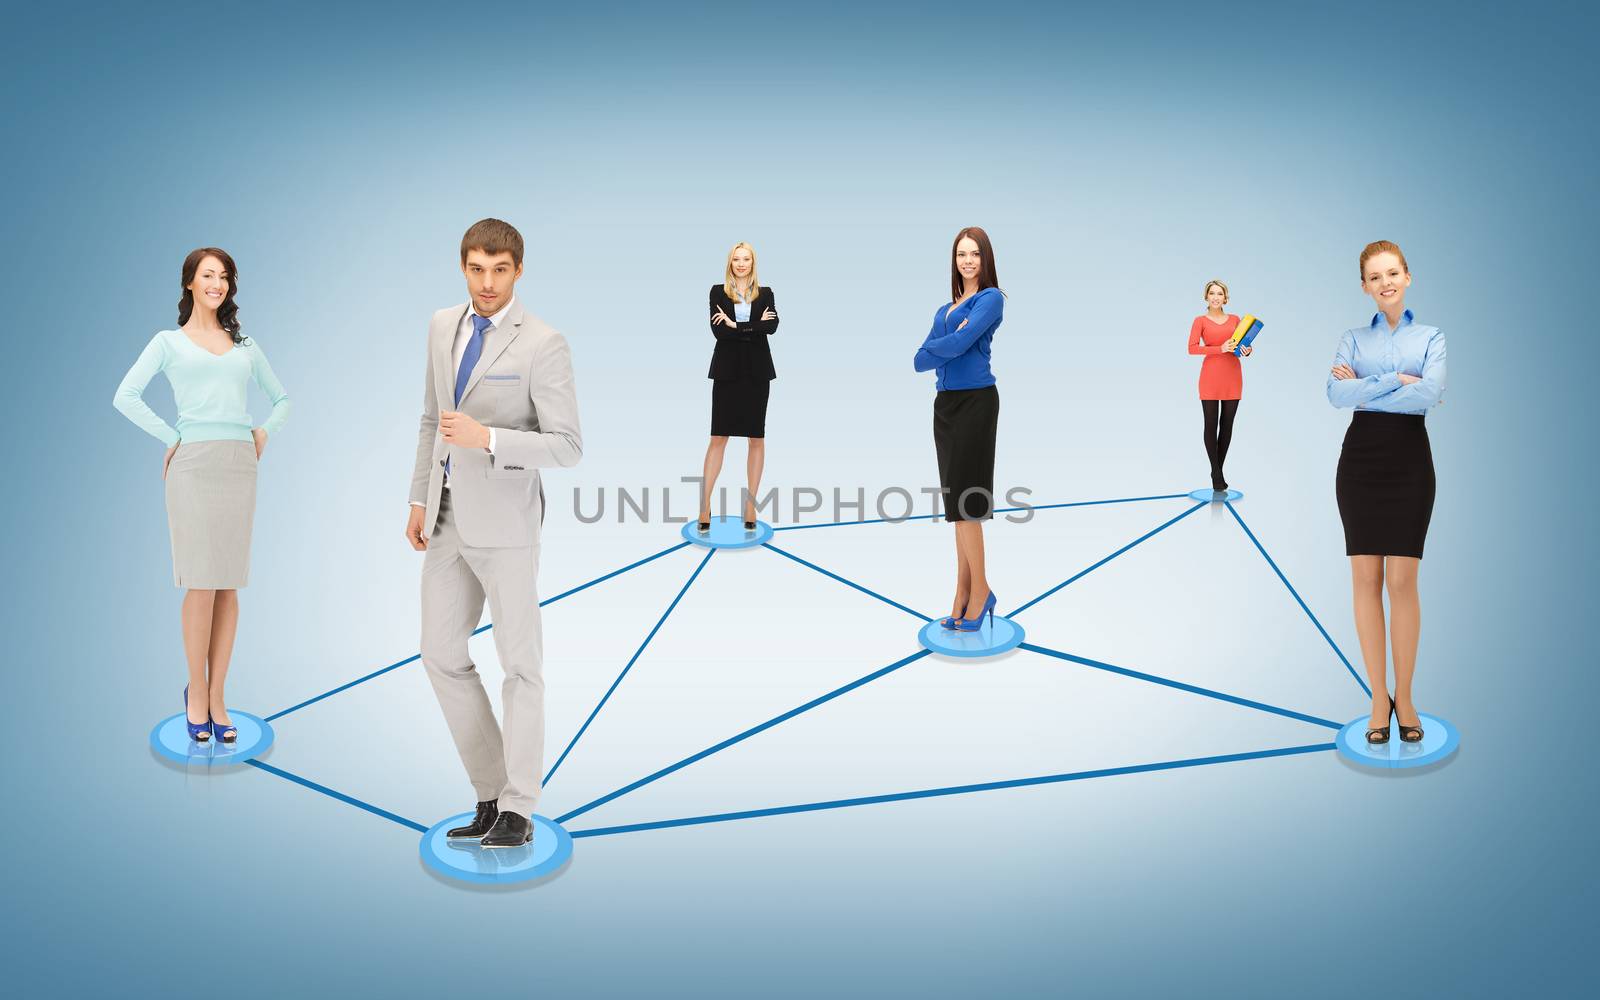 social or business network by dolgachov